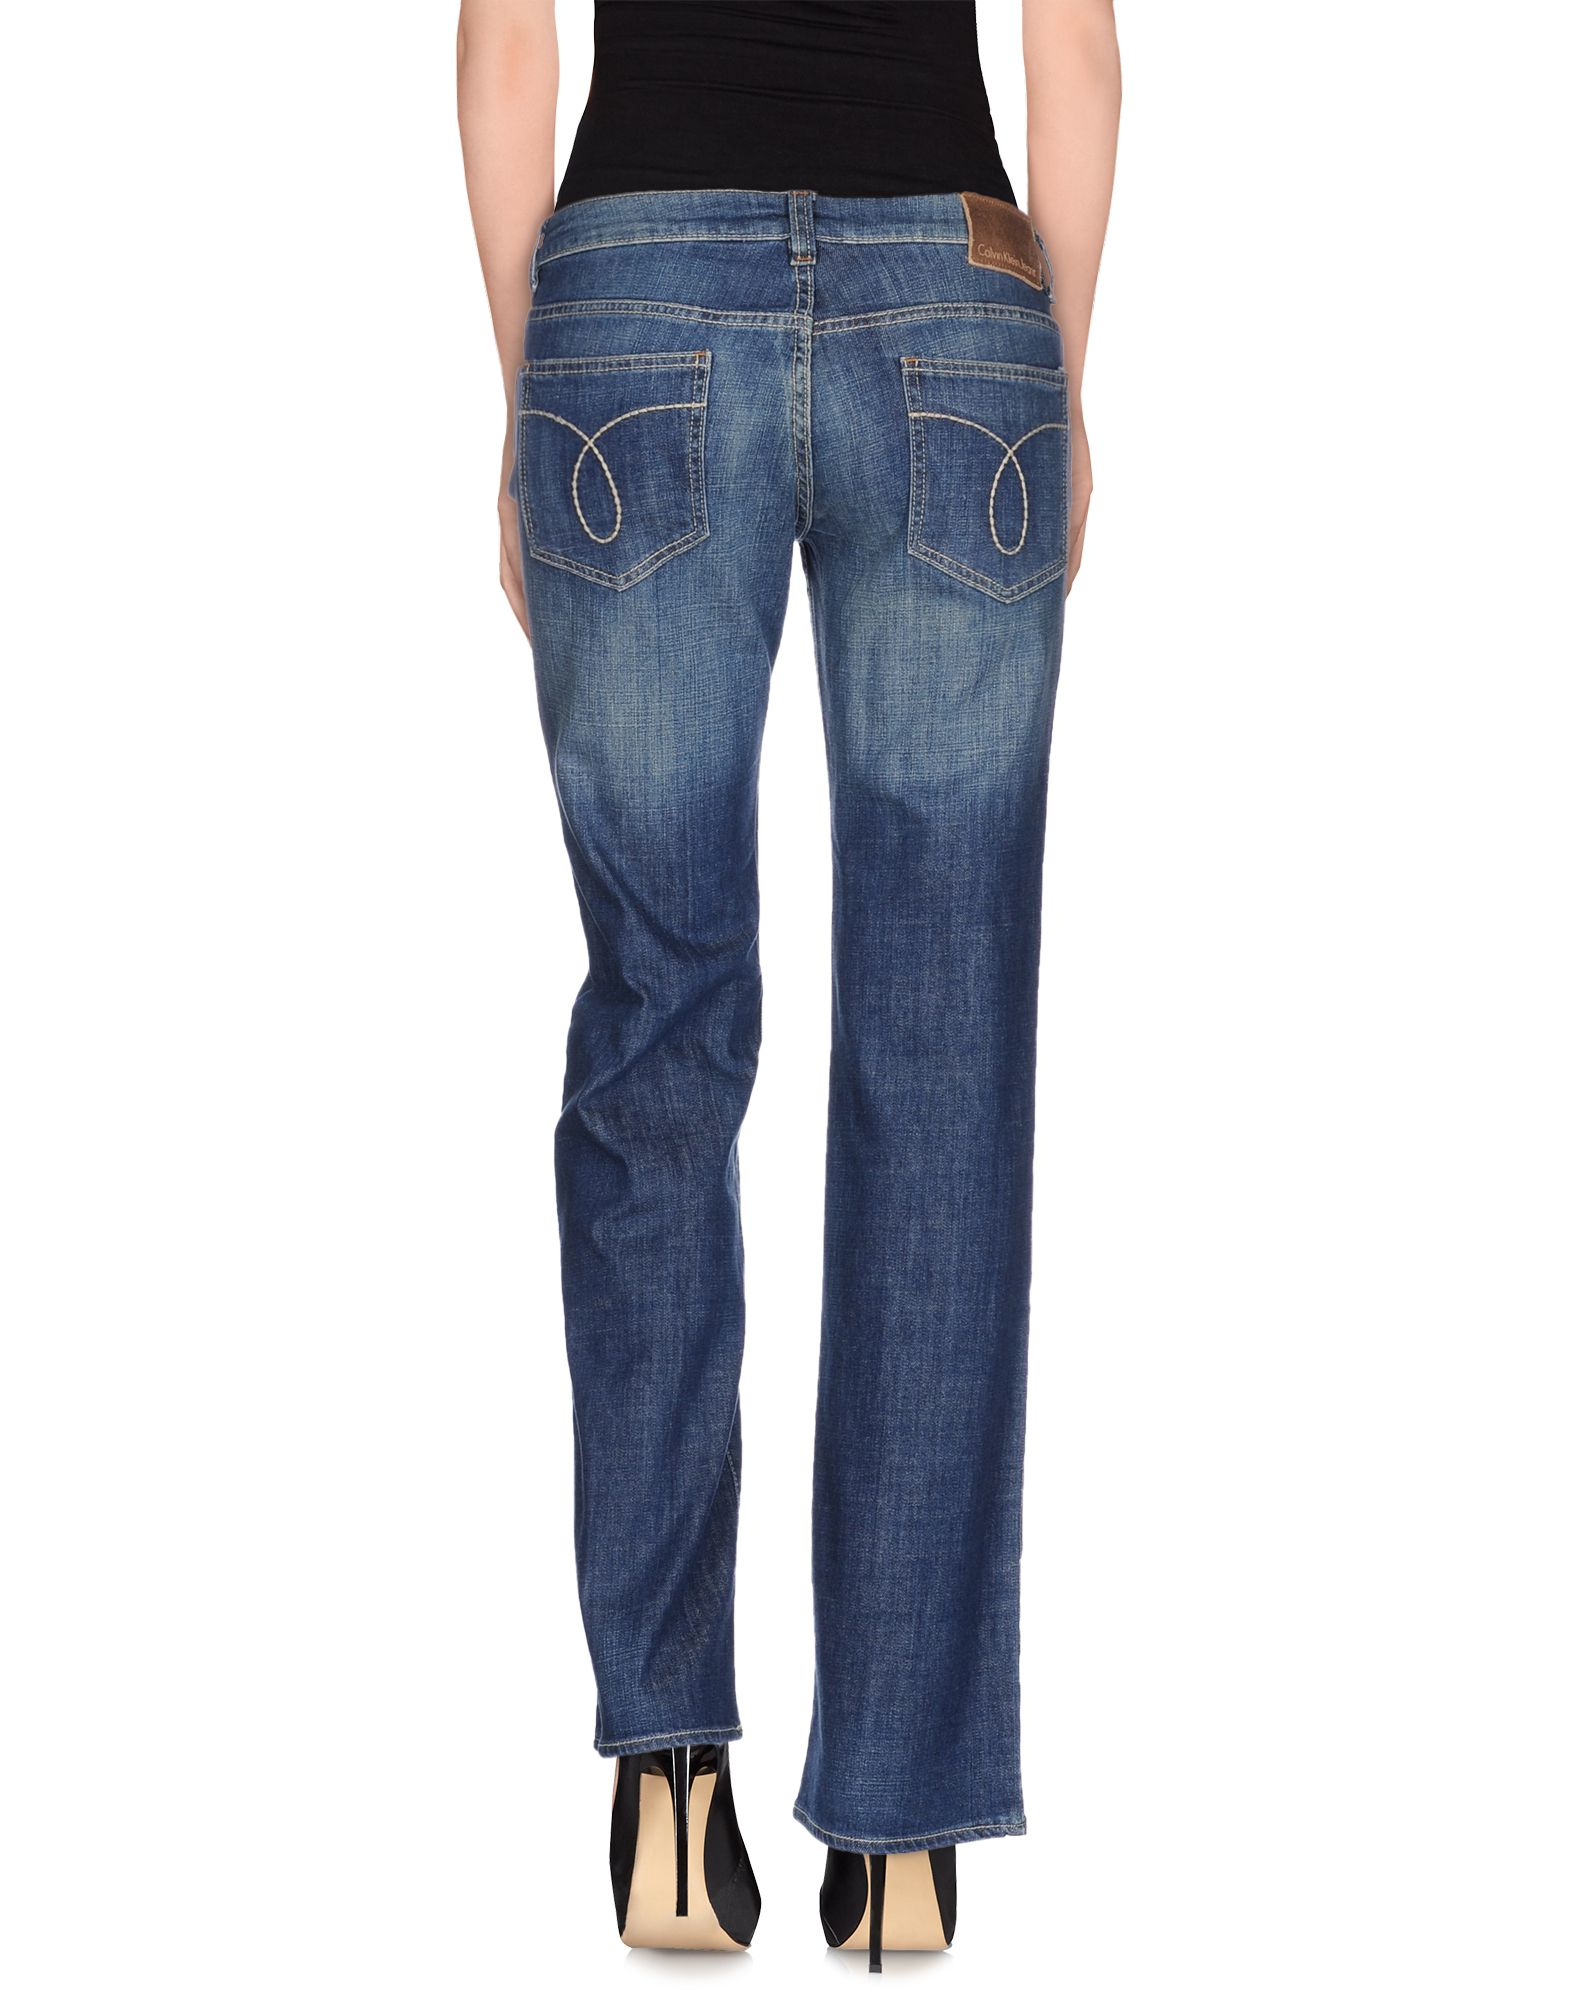 Lyst - Calvin Klein Jeans Denim Pants in Blue